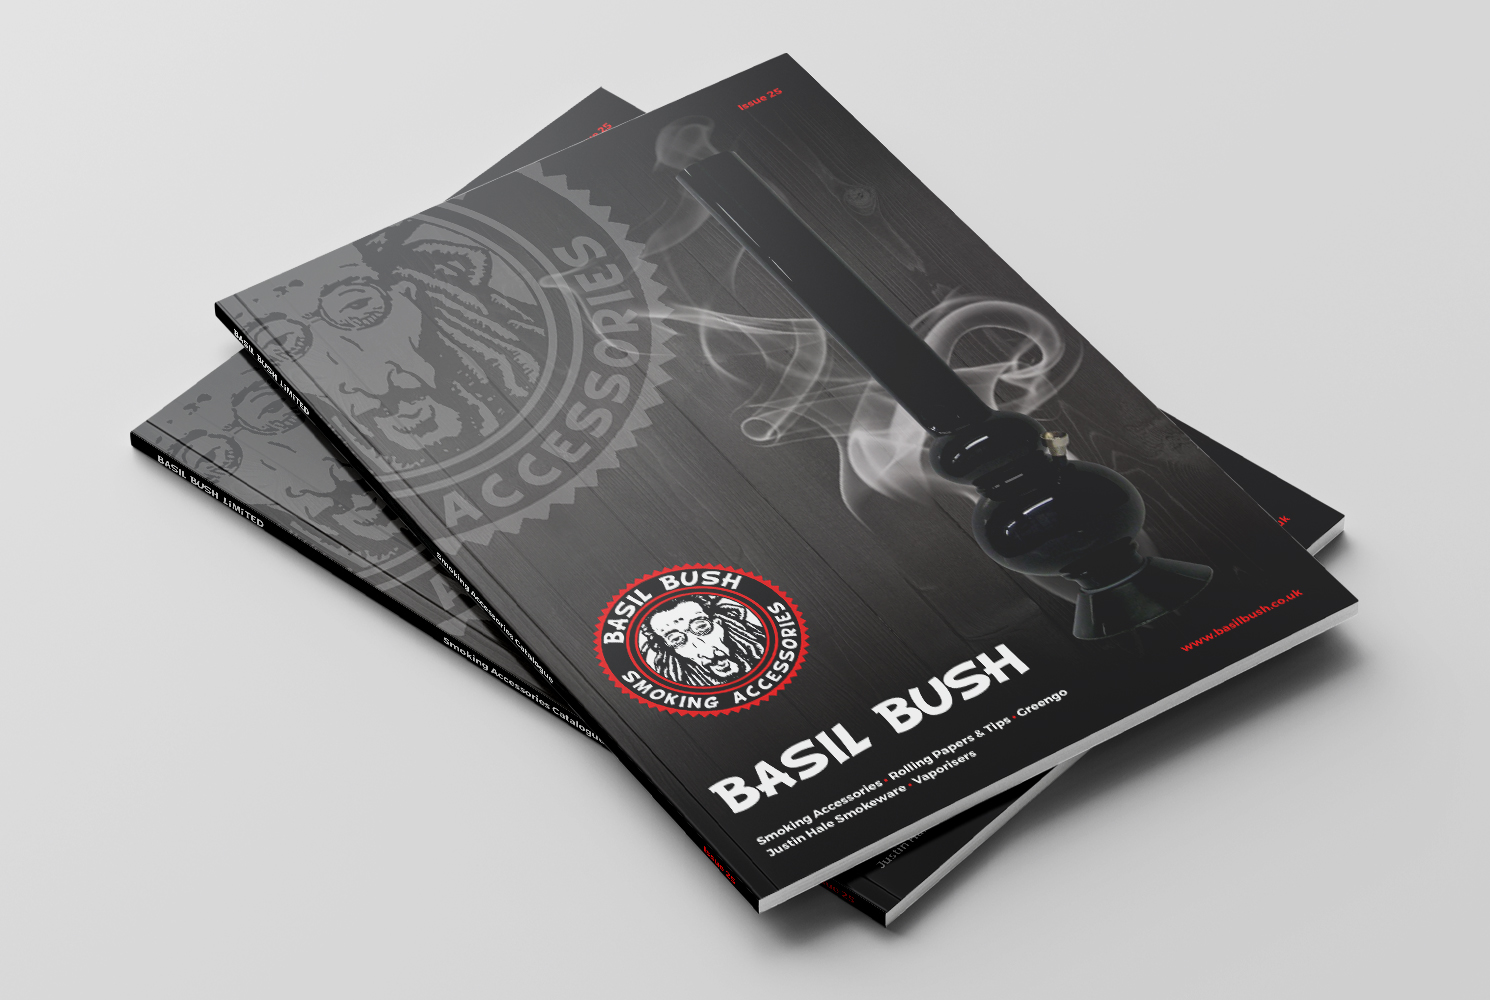 Basil Bush Smoking Accessories Catalogue 1